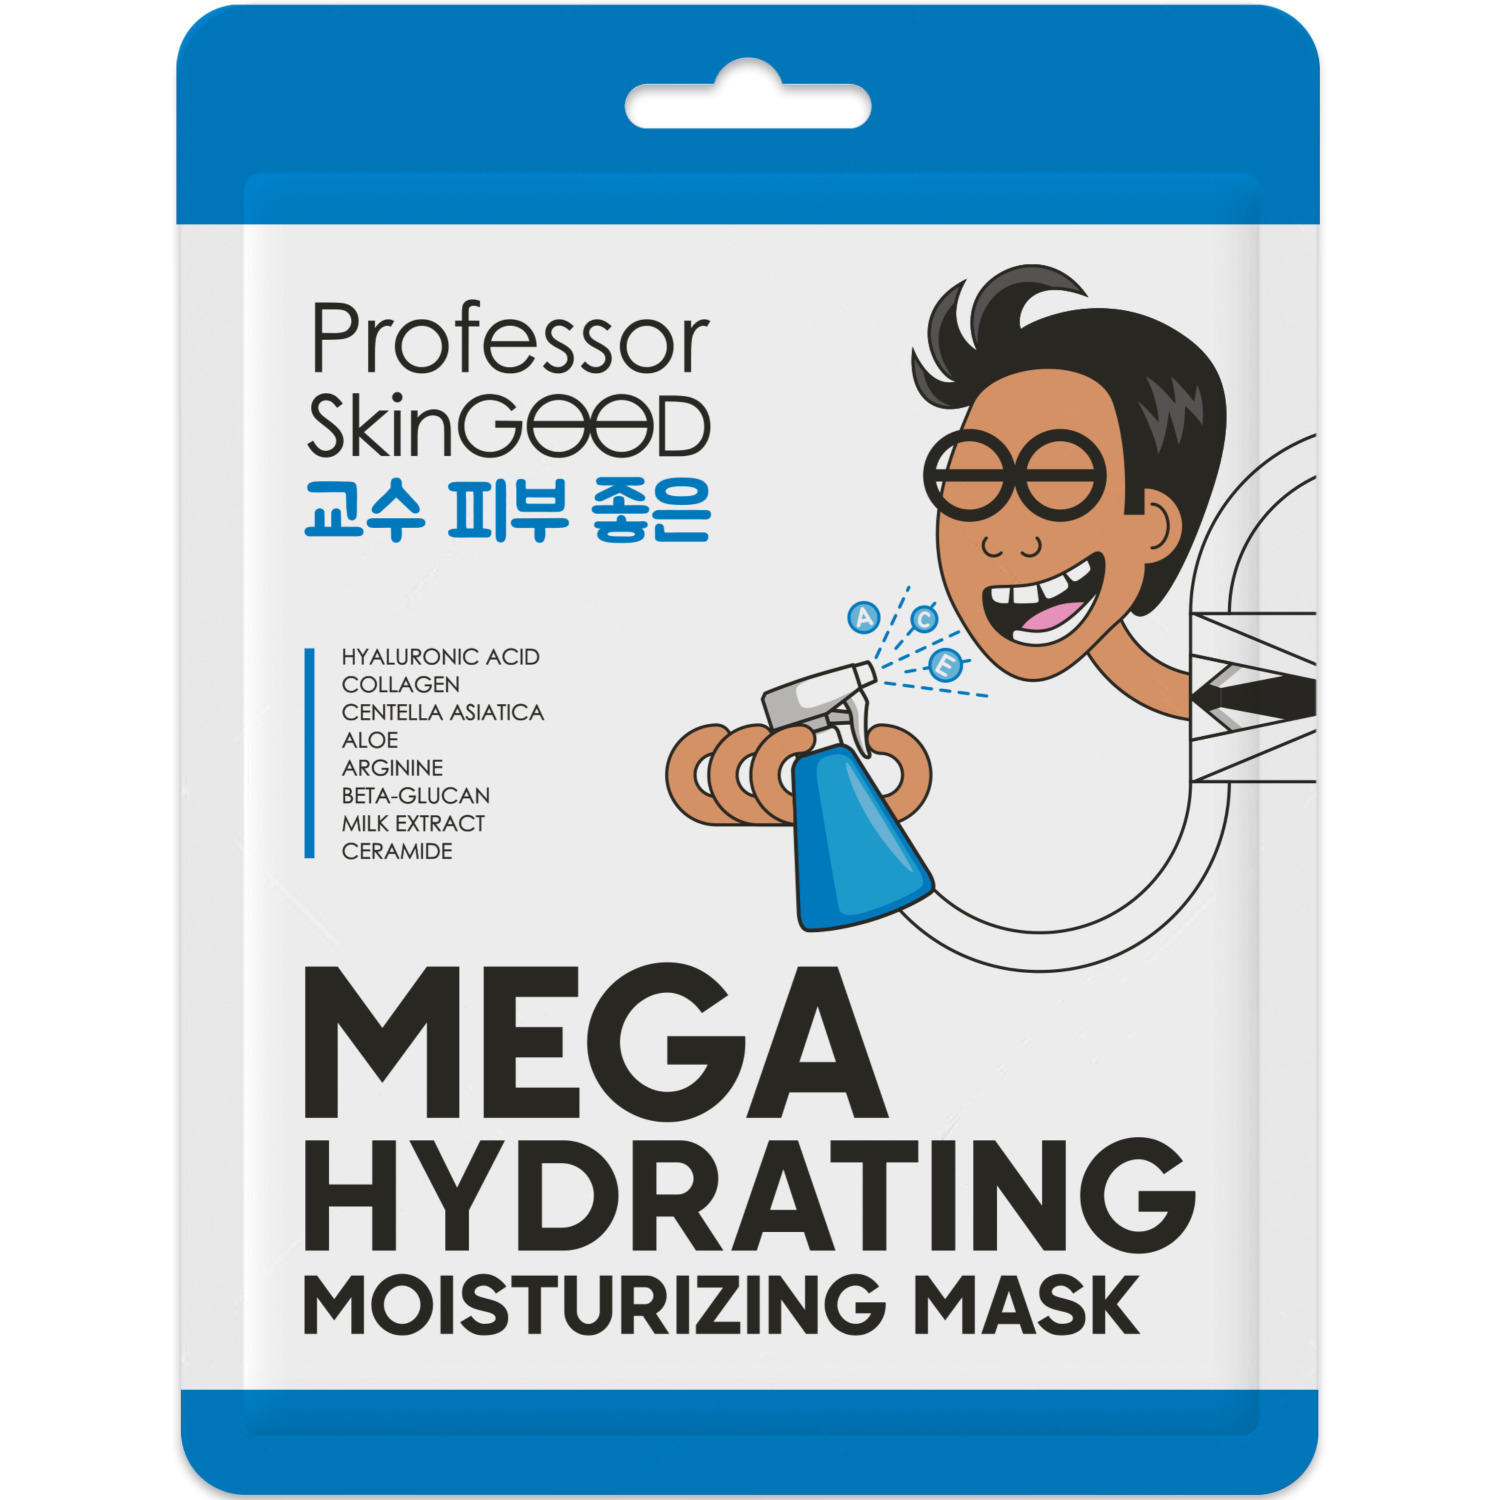 Professor SkinGOOD Увлажняющая маска Mega Hydrating Moisturizing Mask, 25 г (Professor SkinGOOD, Маски) увлажняющая маска восстанавливающая professor skingood mega hydrating moisturizing mask 1 шт